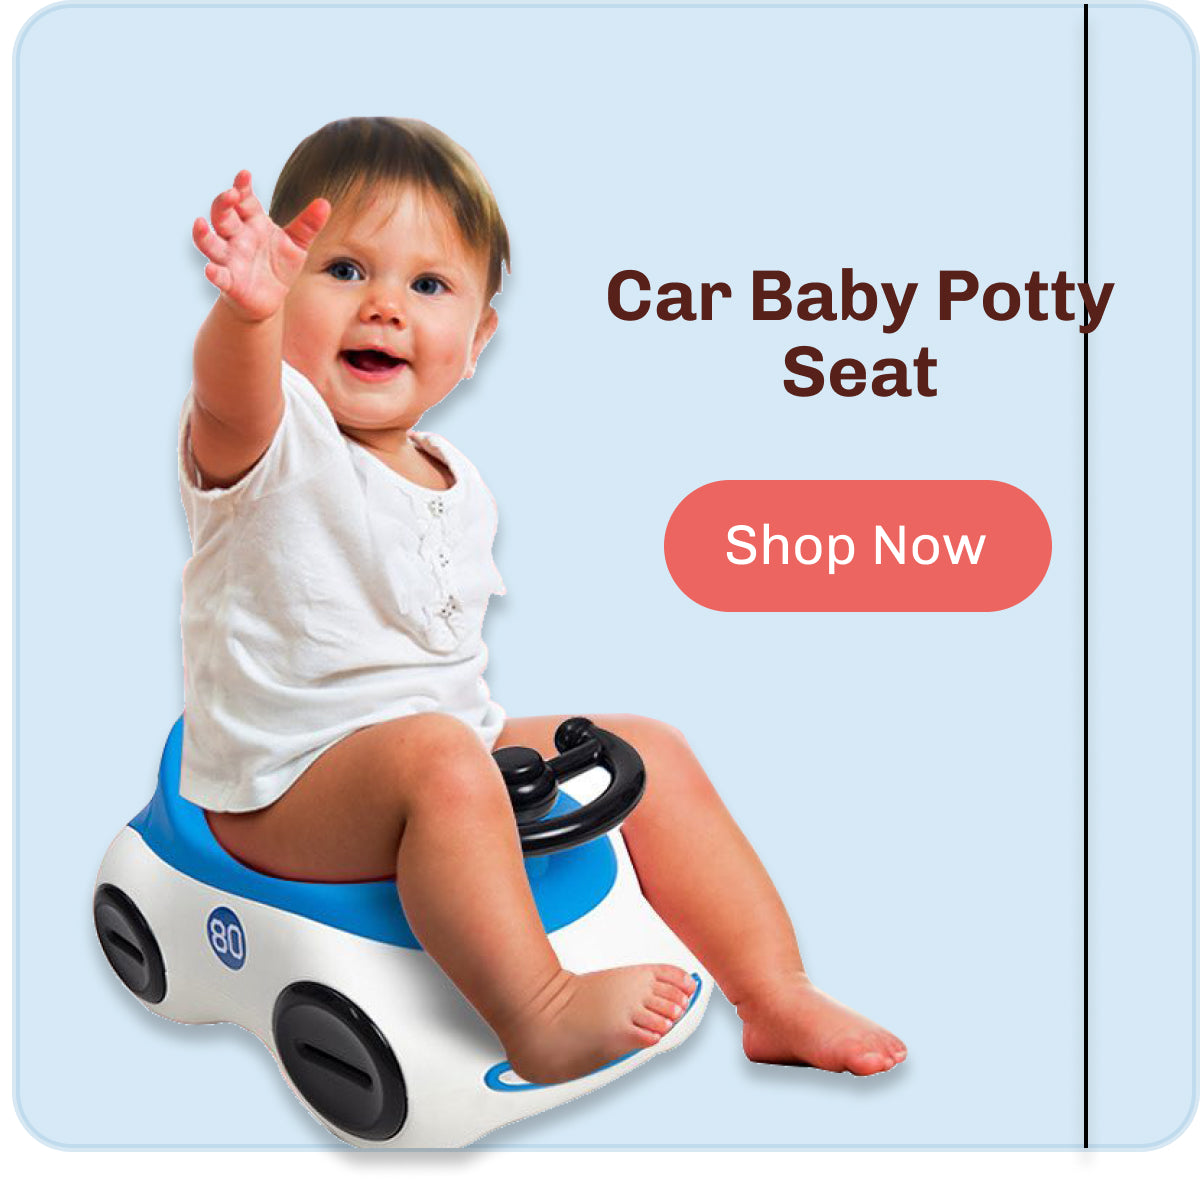 Explore Baby Car Seats, Shop Now, safety seats 